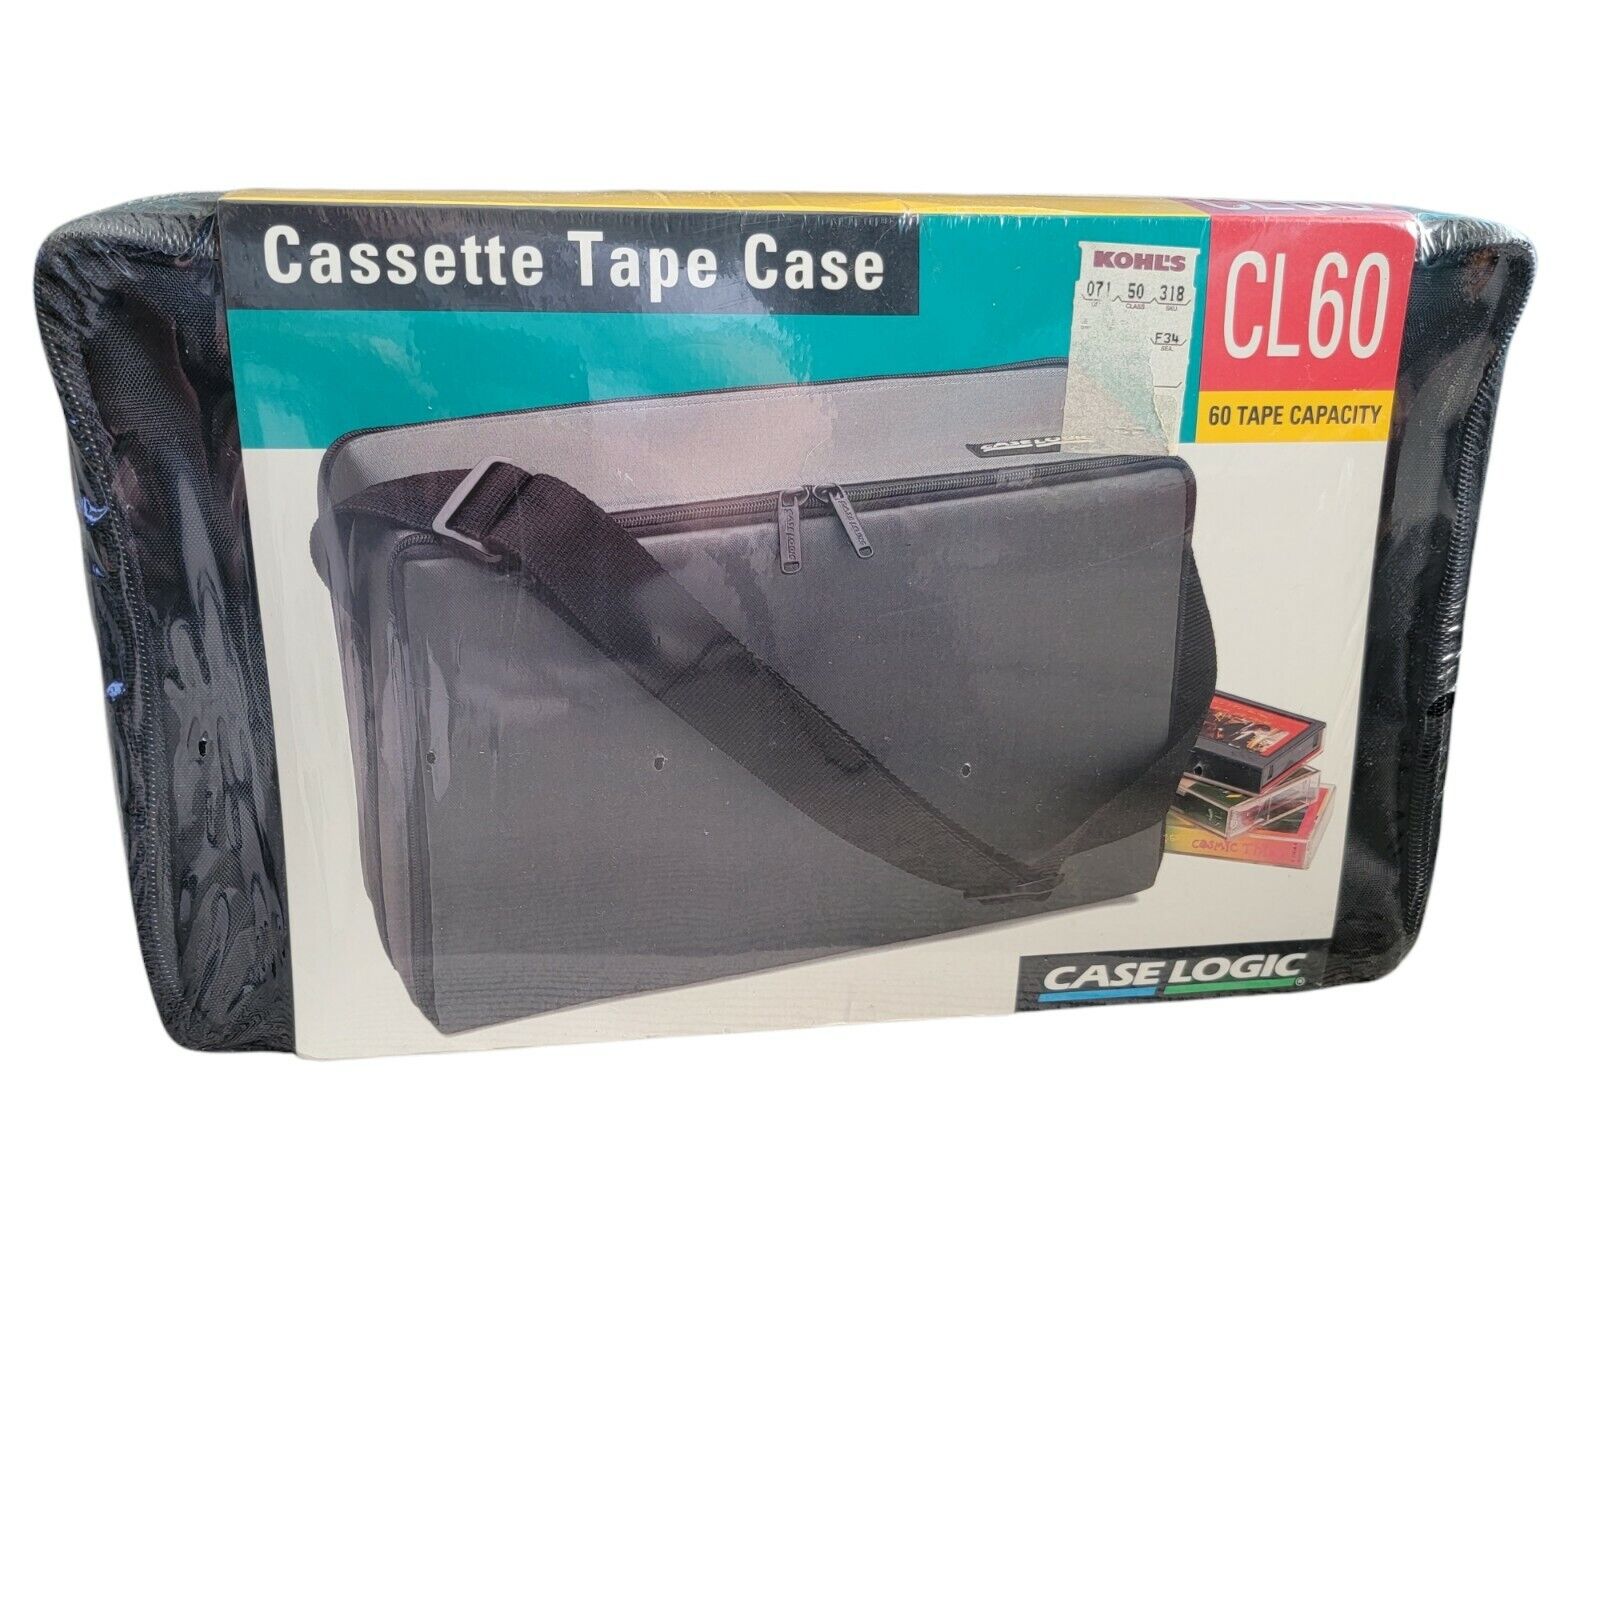 1992 Case New Shipping Free Logic Super sale period limited CL60 Black Shoulder Cassette w Audio Tape